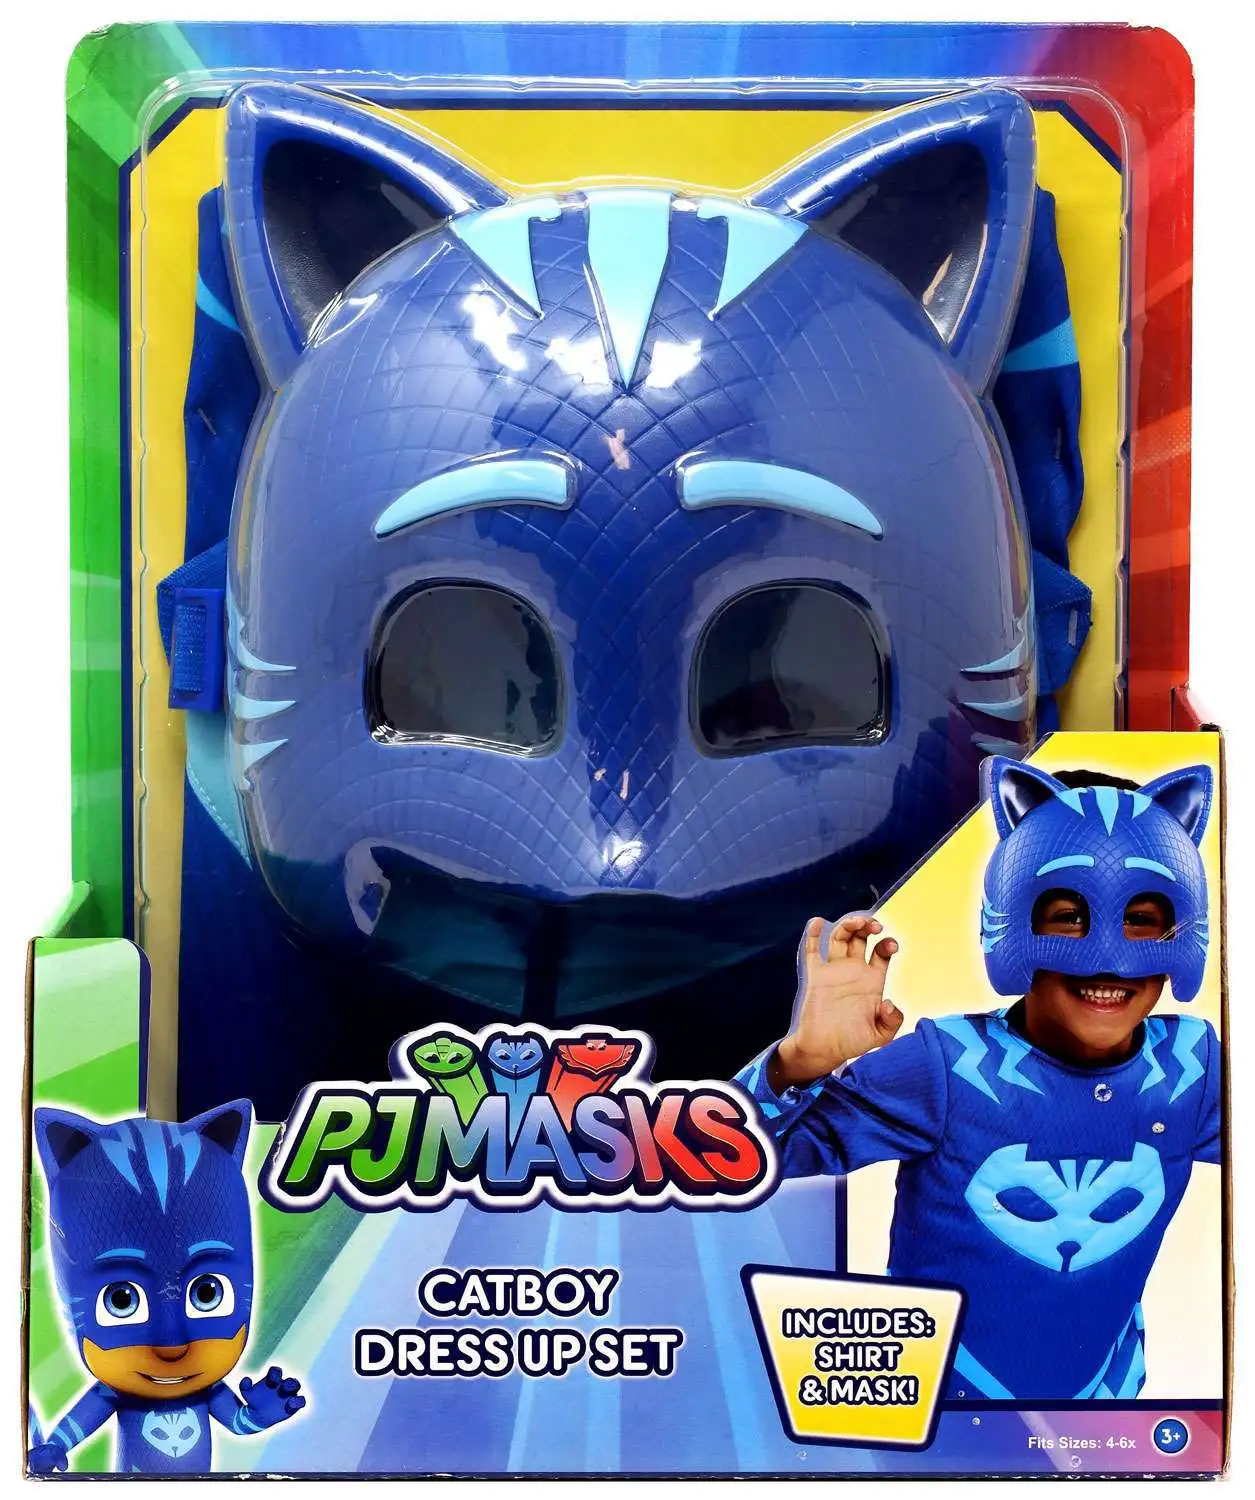 Terug, terug, terug deel lunch eenheid Disney Junior PJ Masks Catboy Dress Up Set Just Play - ToyWiz